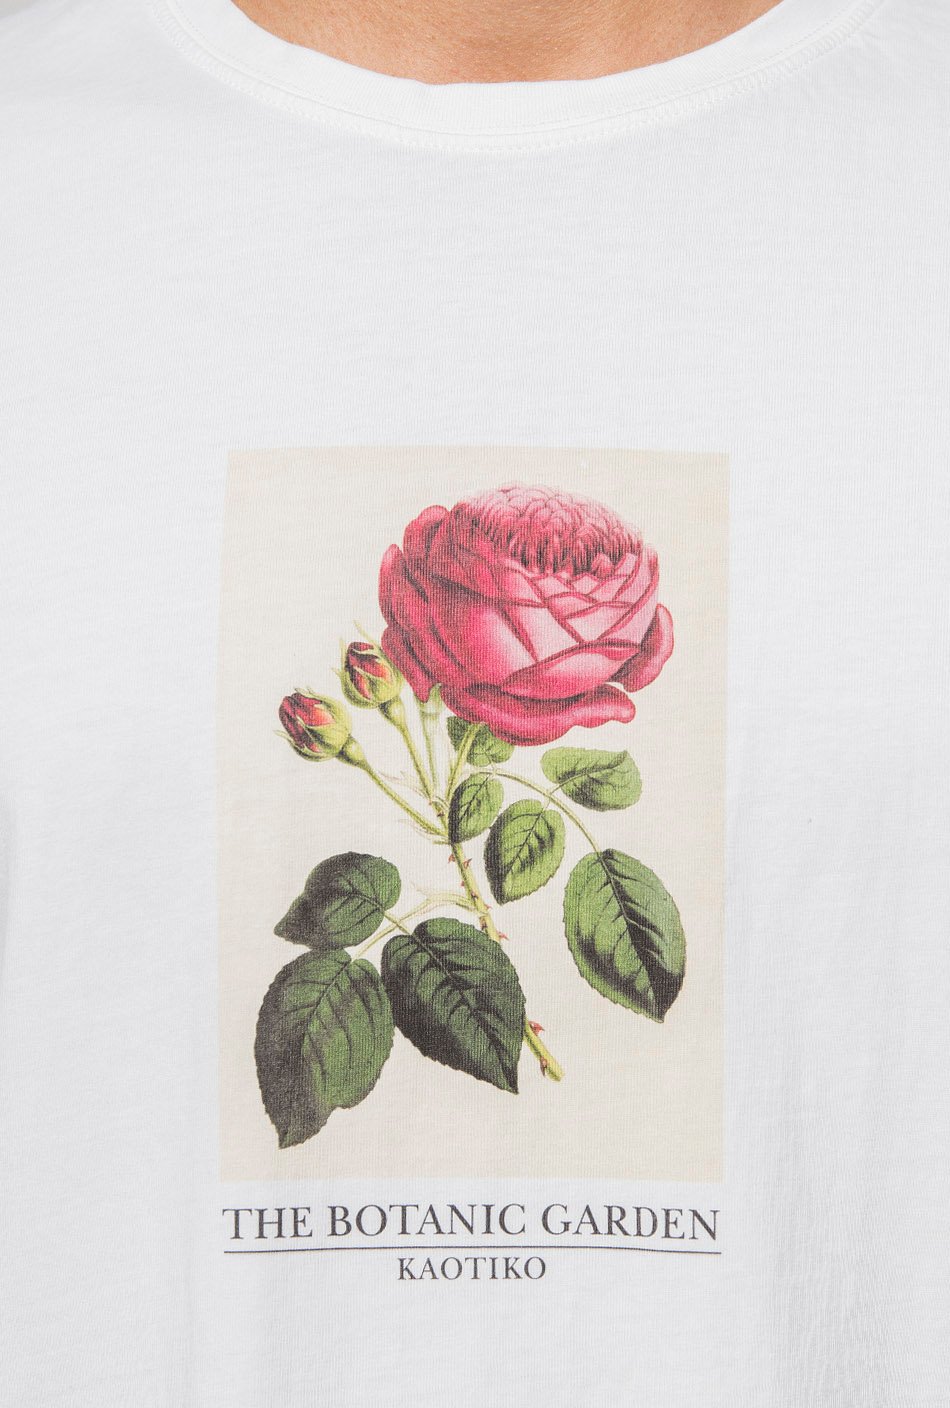 Rose White T-Shirt